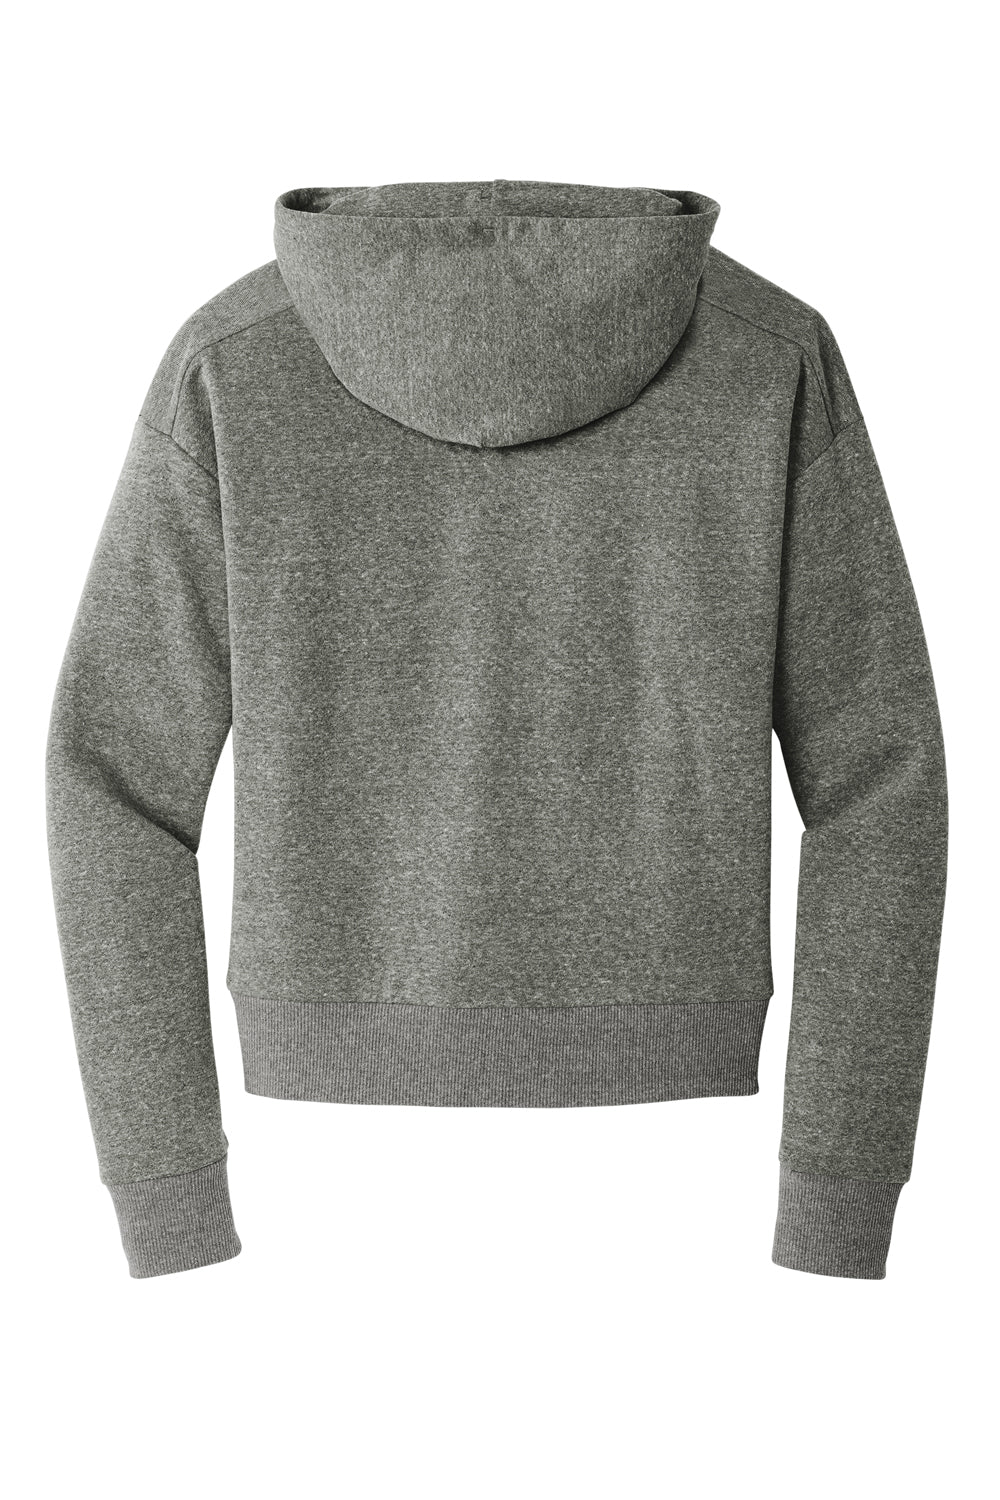 District DT1311 Womens Perfect Tri Fleece 1/4 Zip Hooded Sweatshirt Hoodie Heather Charcoal Grey Flat Back